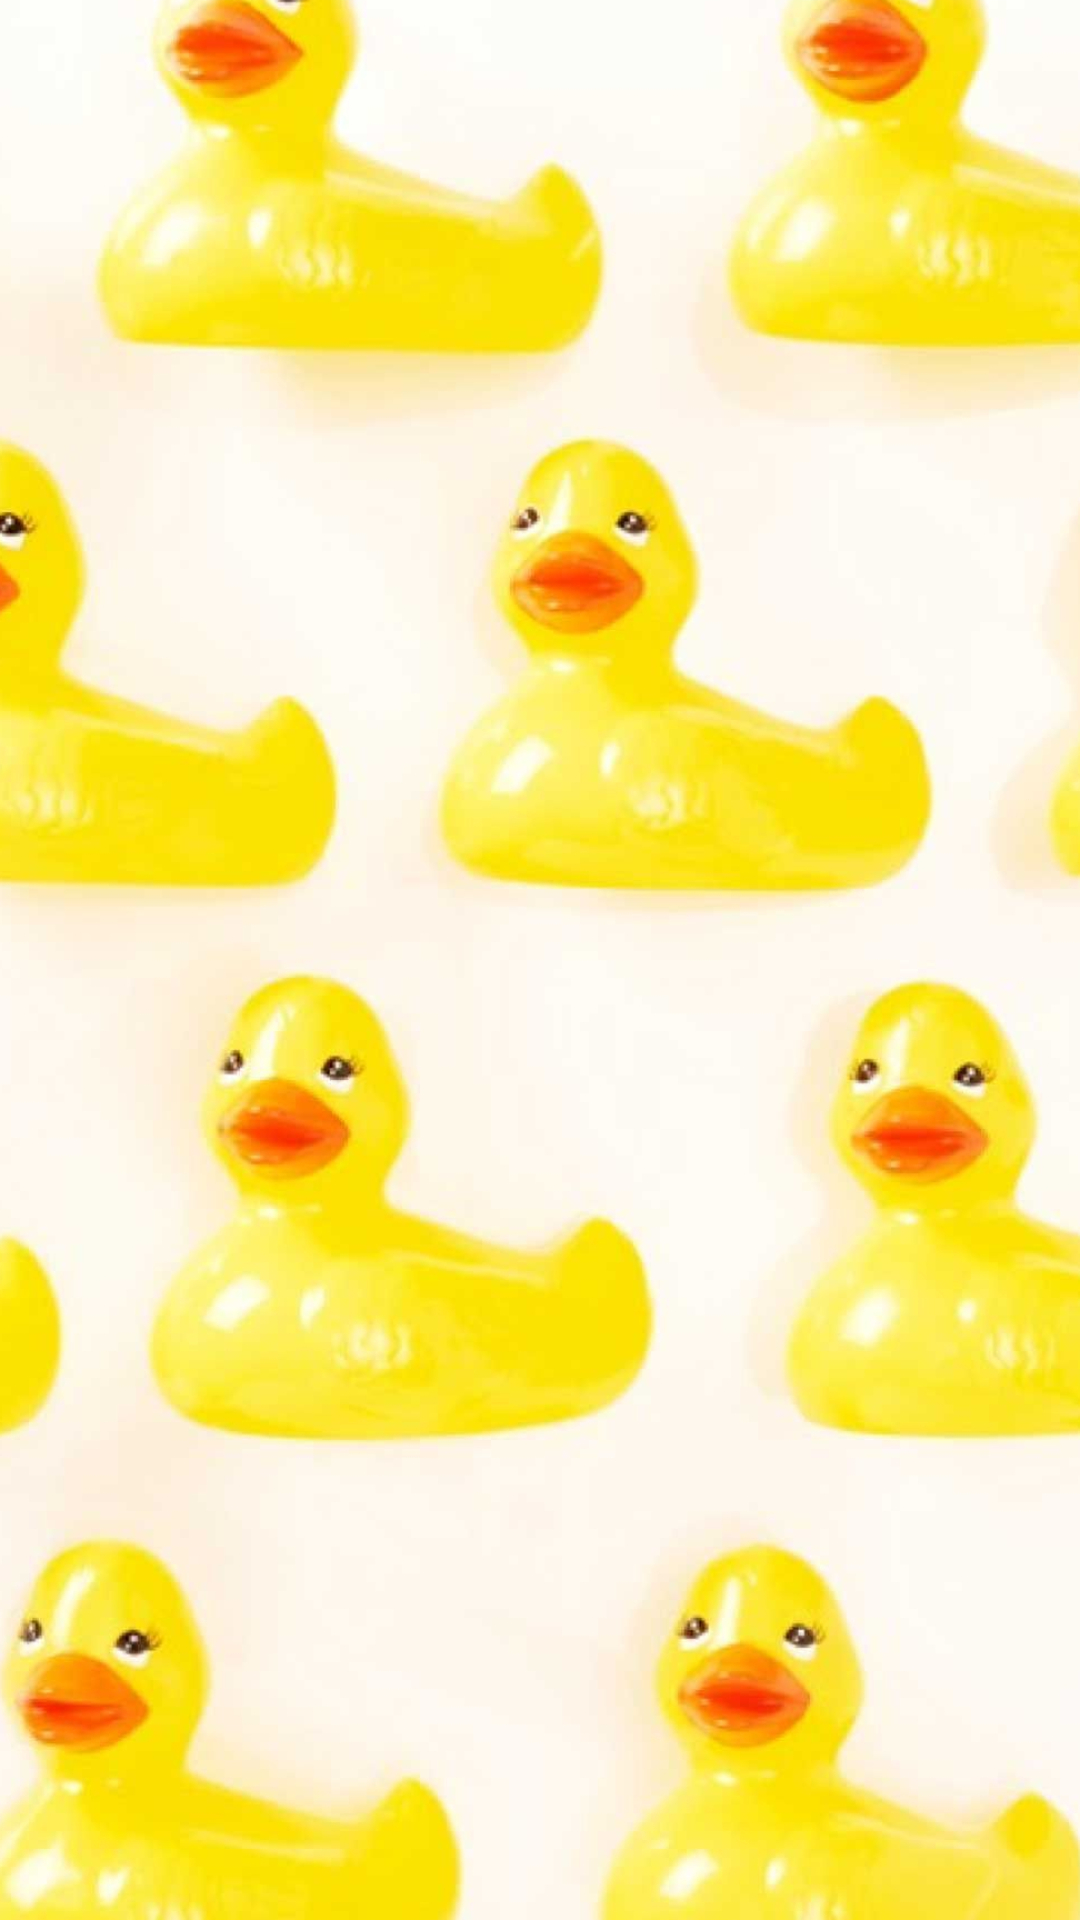 1080x1920 Rubber Duck iPhone Wallpaper | Wallpaper, Bath and body works, Rubber duck